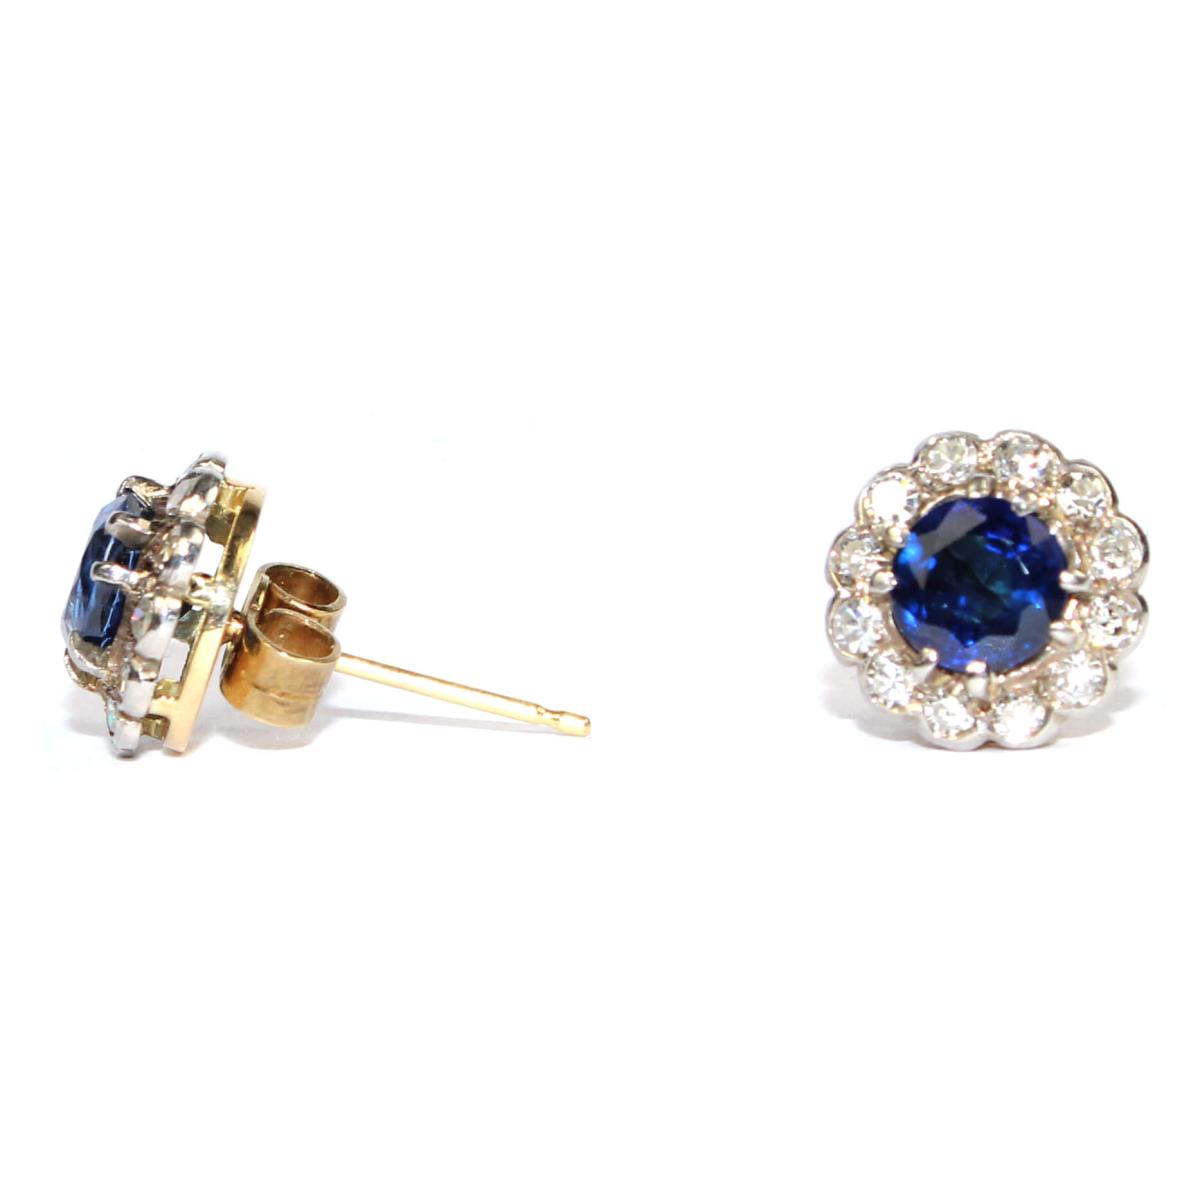 Sapphire and Diamond Cluster Earrings circa 1950